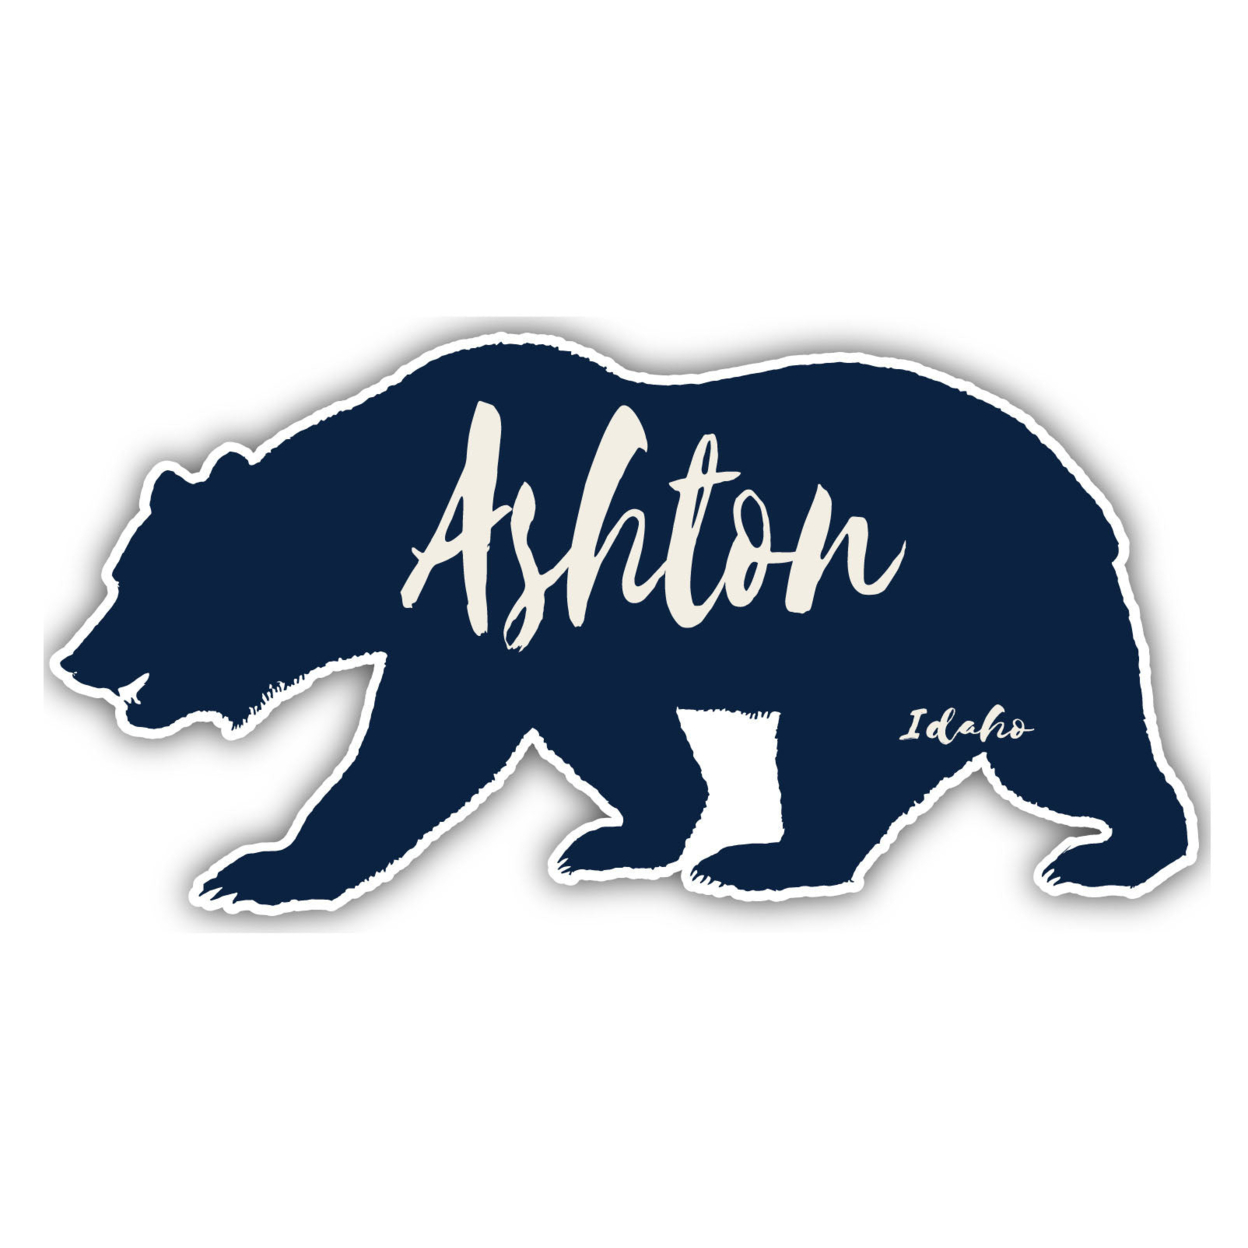 Ashton Idaho Souvenir Decorative Stickers (Choose Theme And Size) - 4-Pack, 6-Inch, Adventures Awaits